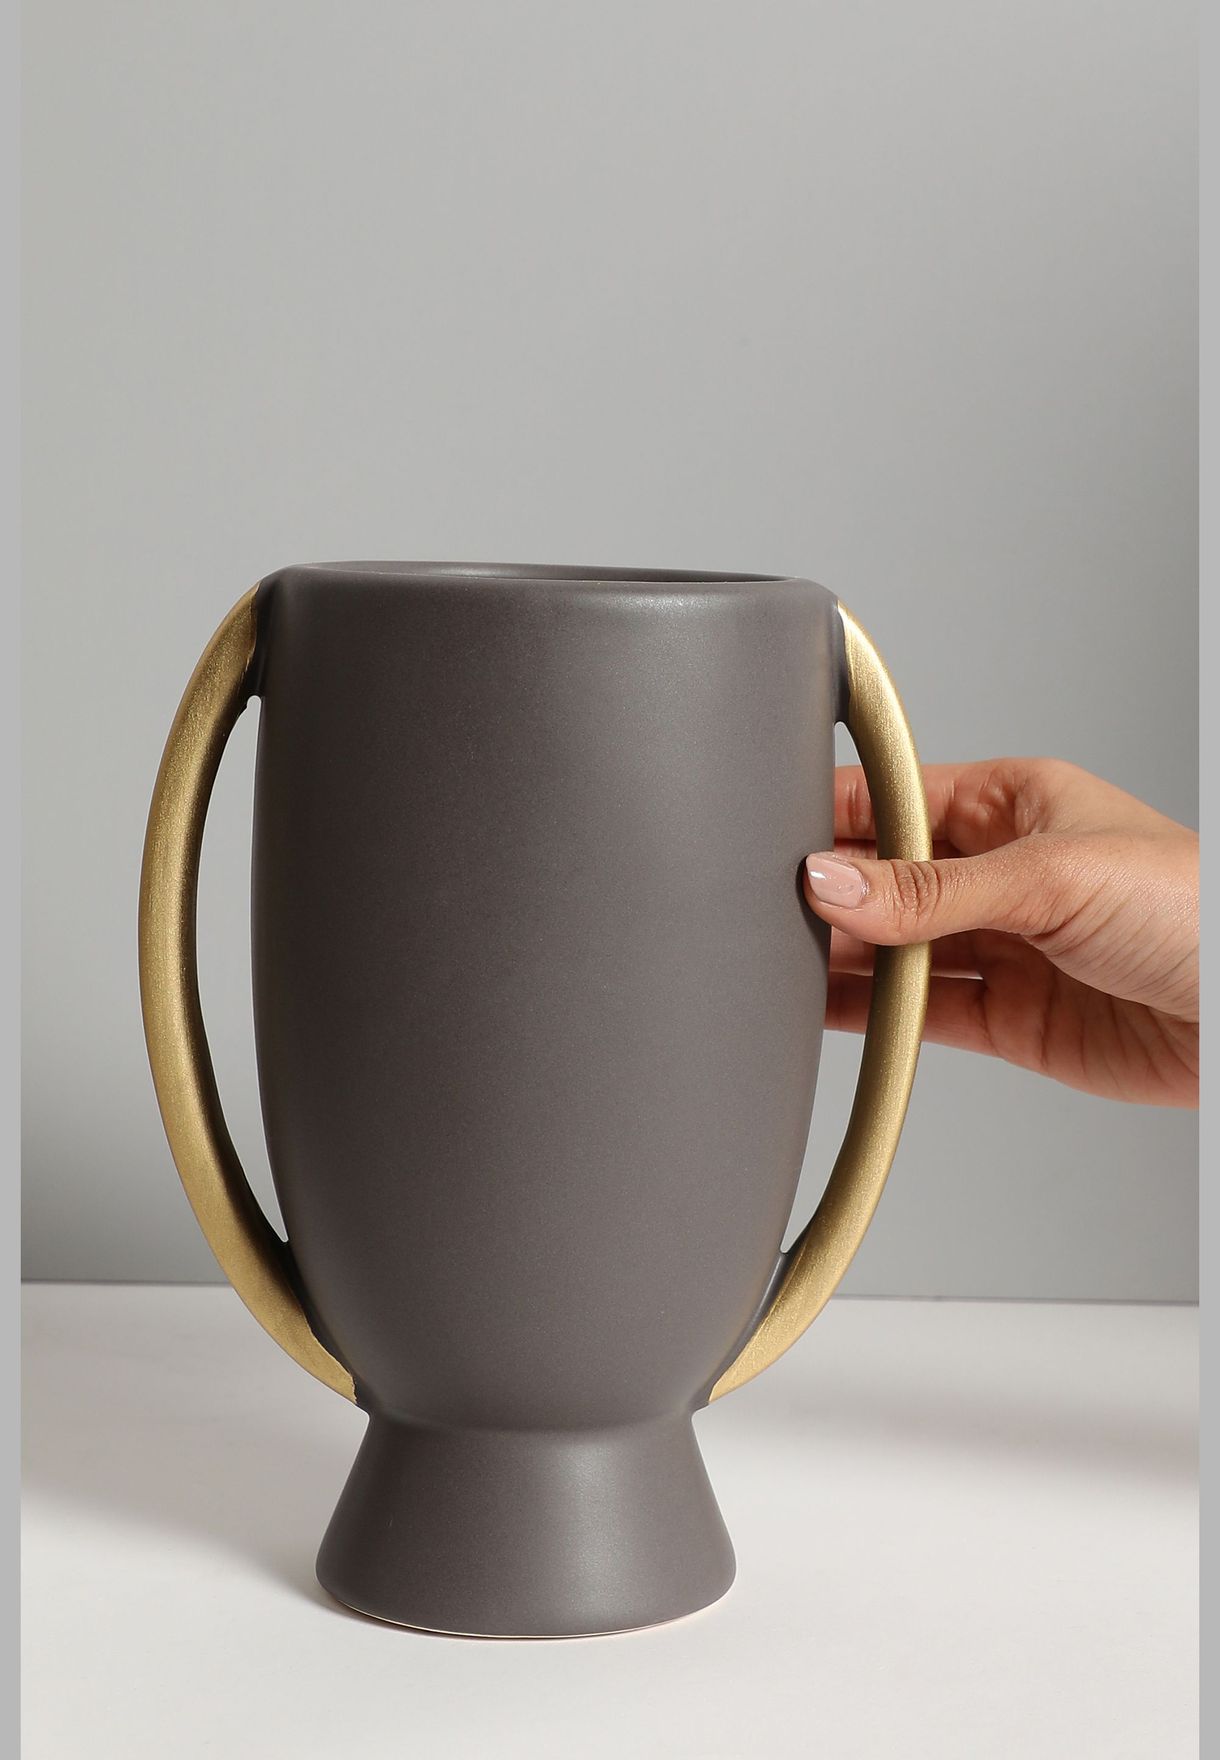 Trophy Shaped Modern Ceramic Flower Vase For Home Decor 